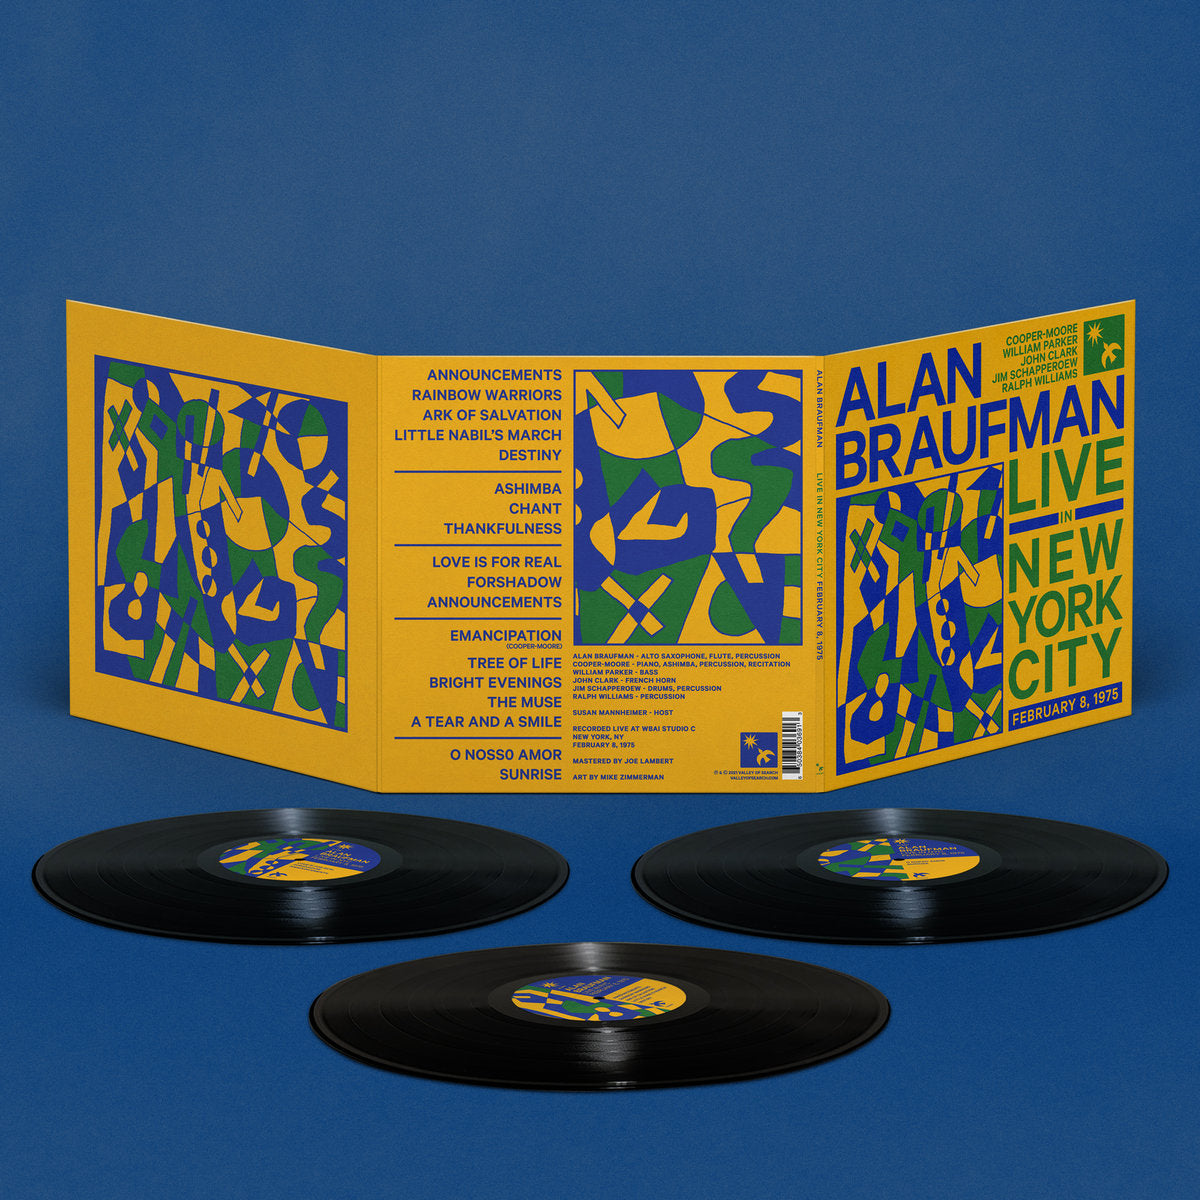 ALAN BRAUFMAN - Live in New York City, February 8, 1975 - 3LP - Vinyl